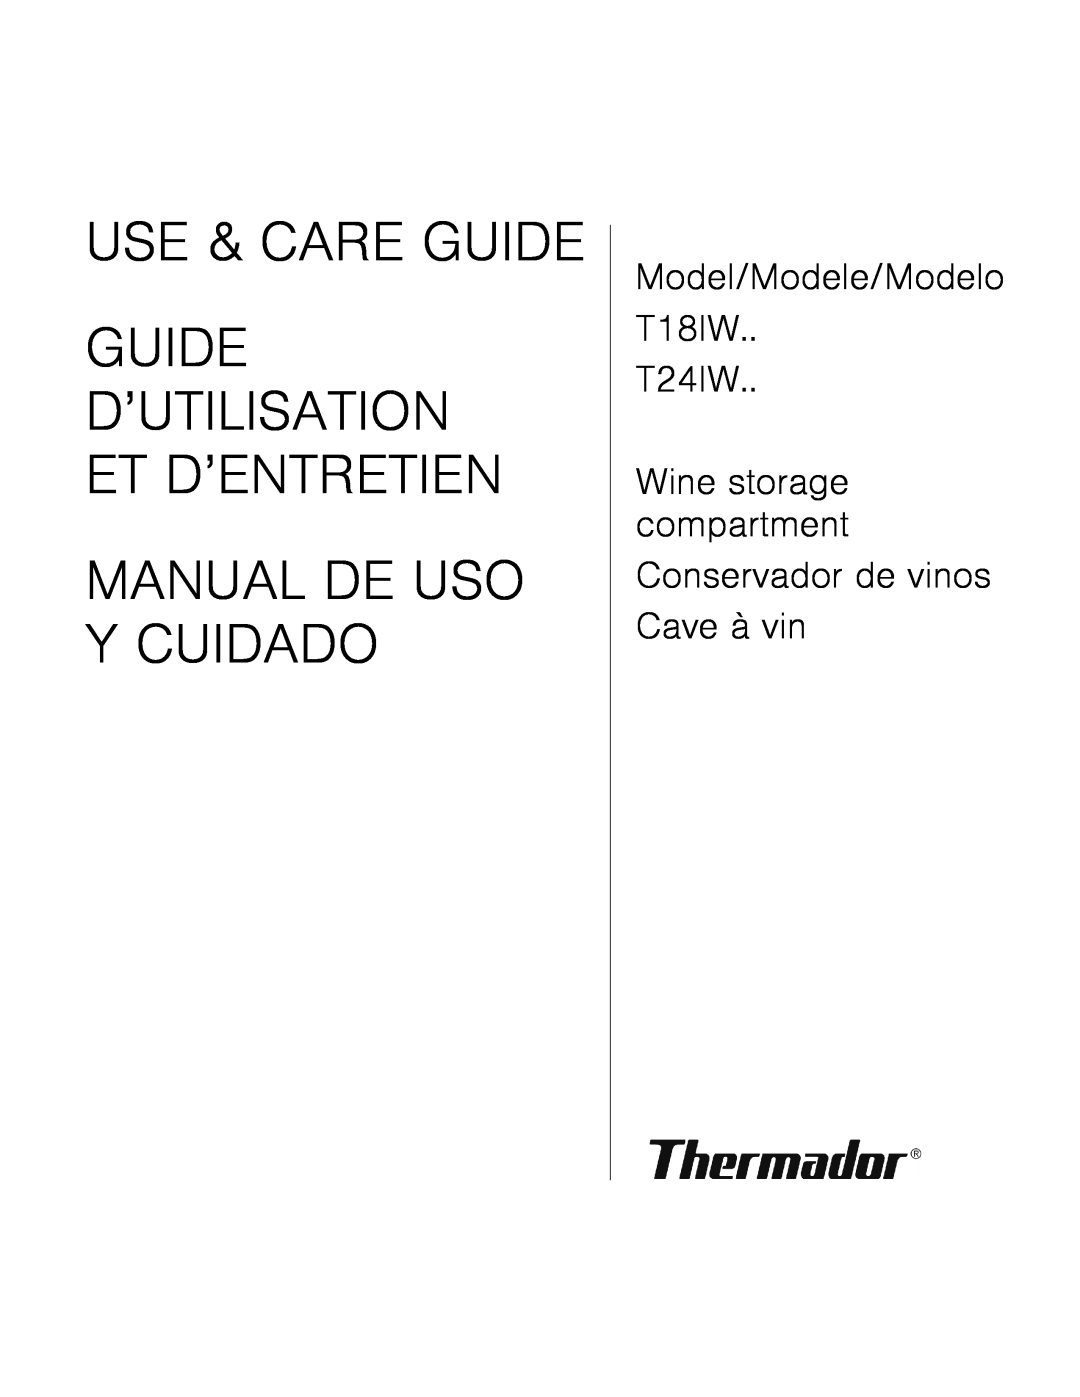 Thermador T18IW, T24IW manual Use & Care Guide, Manual De Uso Y Cuidado, Guide D’Utilisation Et D’Entretien 